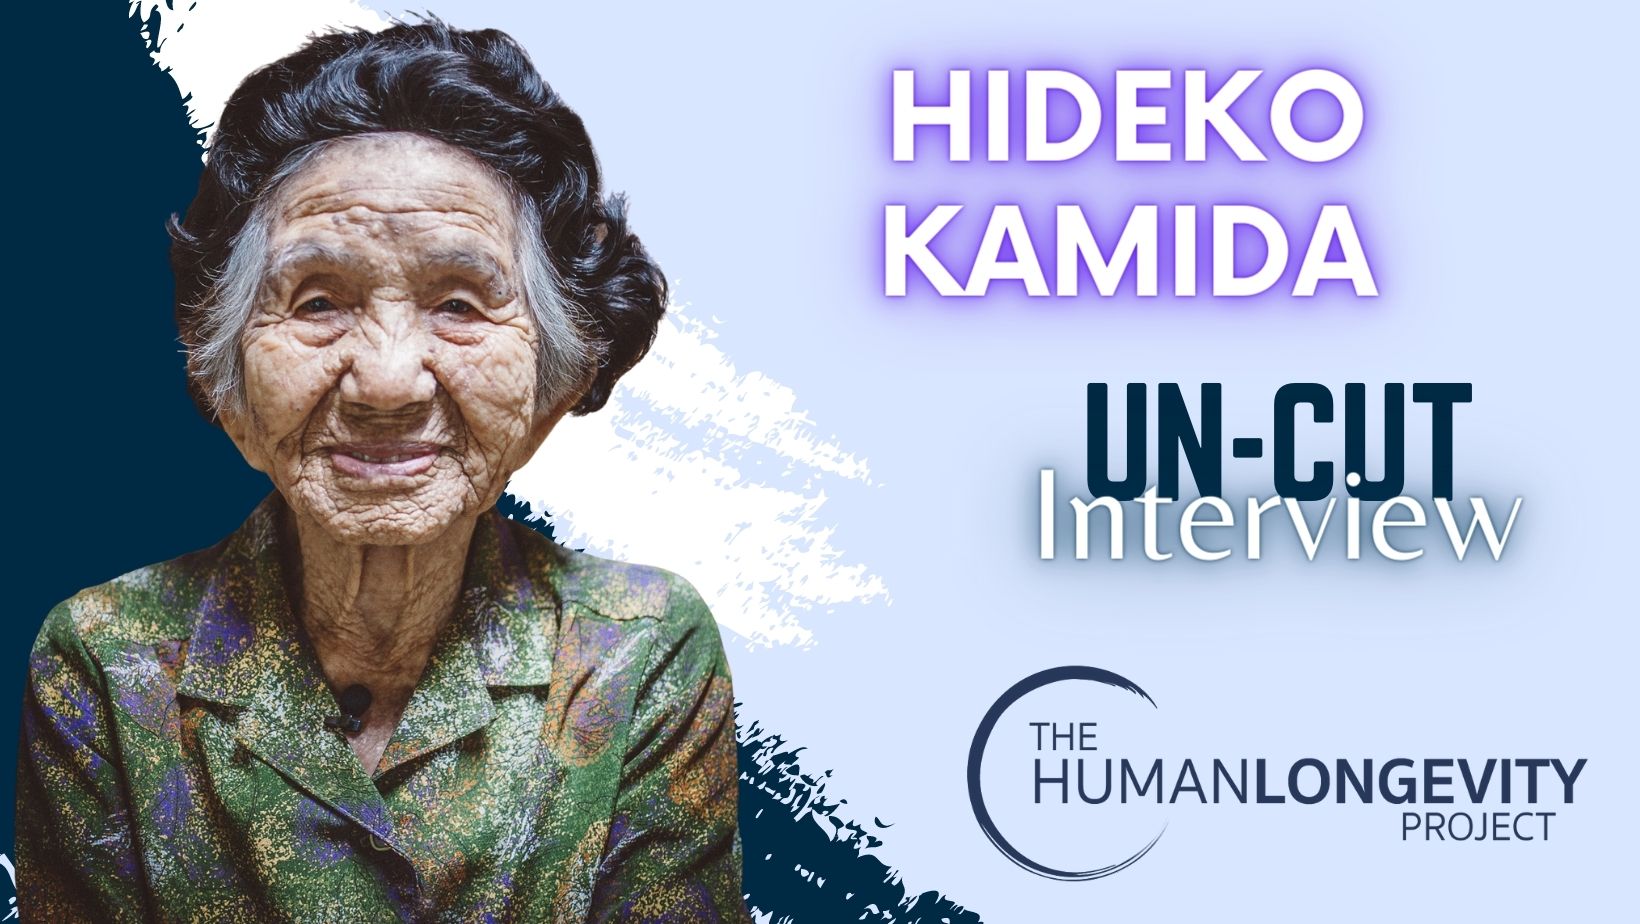 Human Longevity Project Uncut Interview With Hideko Kamida